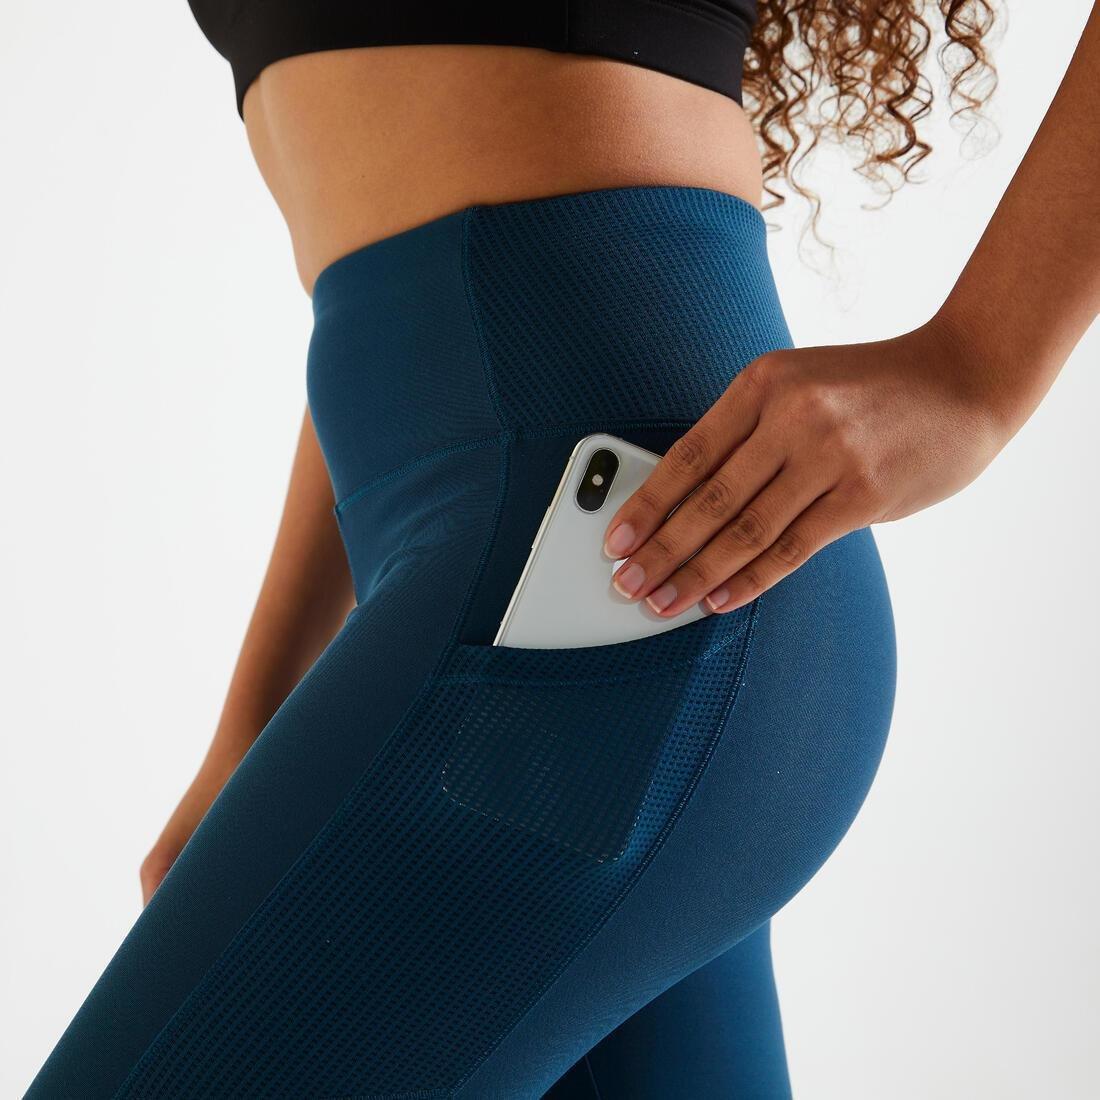 Women's Fitness Cardio Short Leggings with Phone Pocket - Black DOMYOS